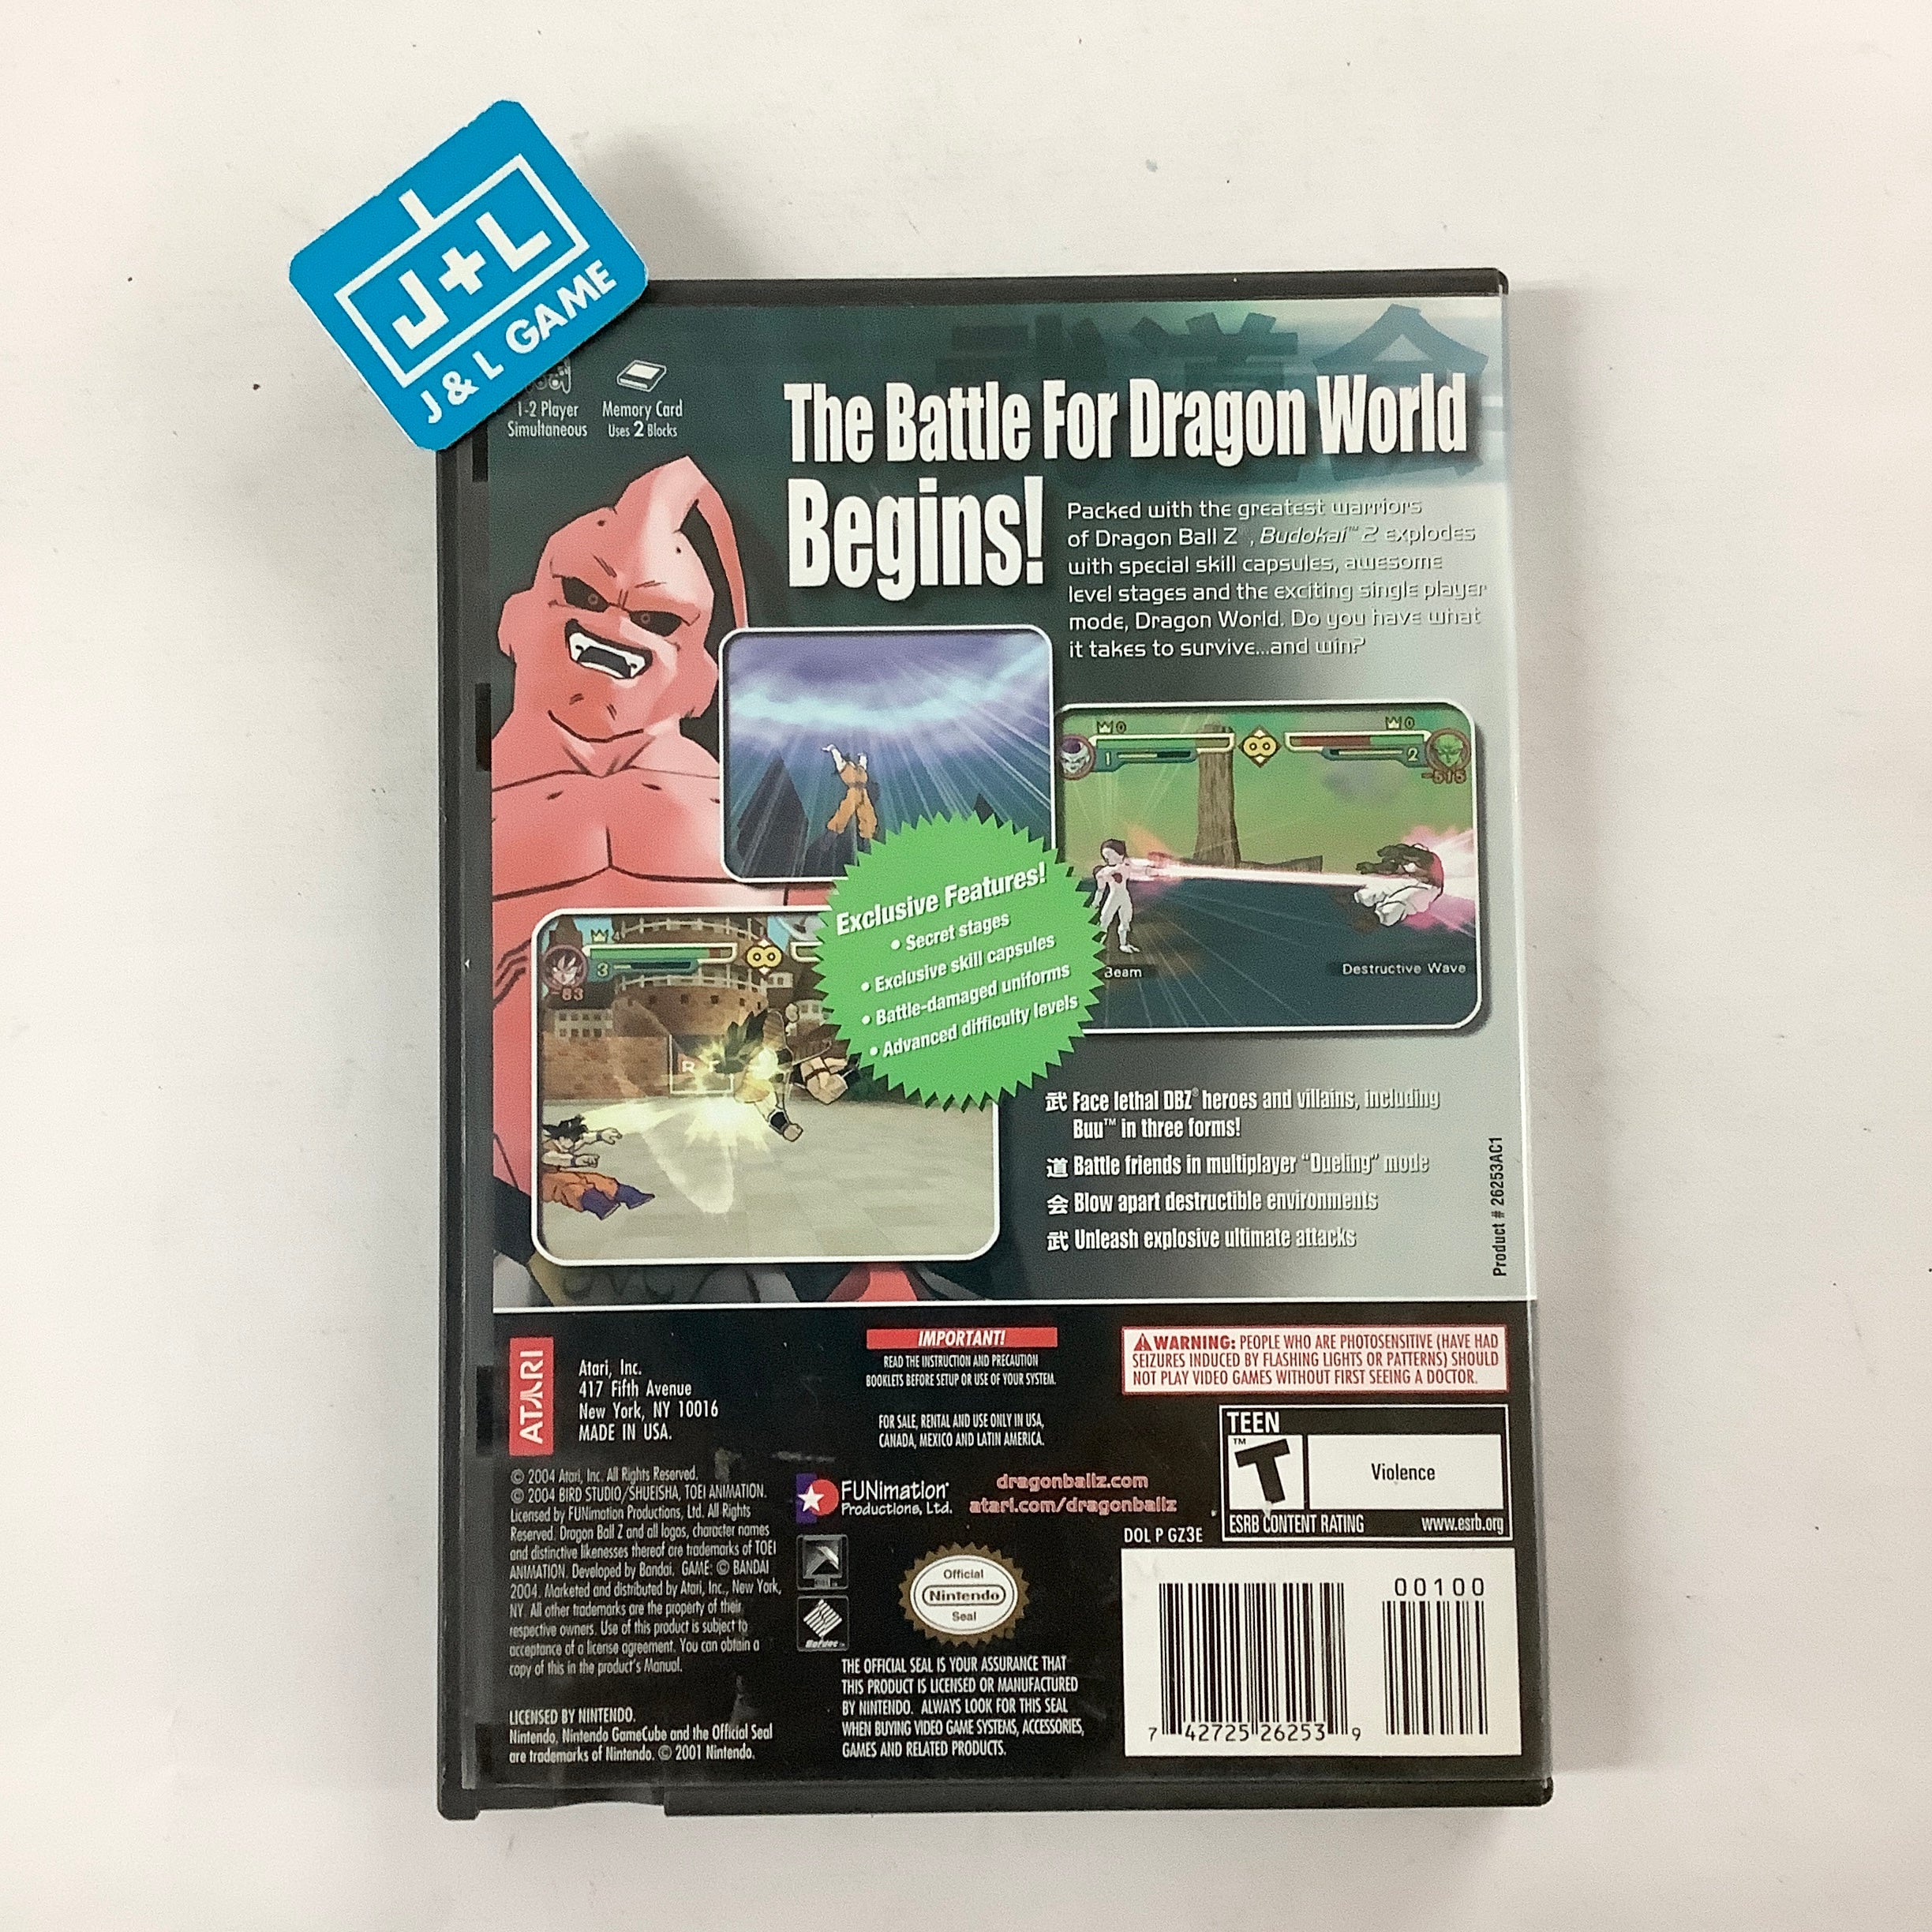 Dragon Ball Z: Budokai 2 - (GC) GameCube [Pre-Owned] Video Games Atari SA   